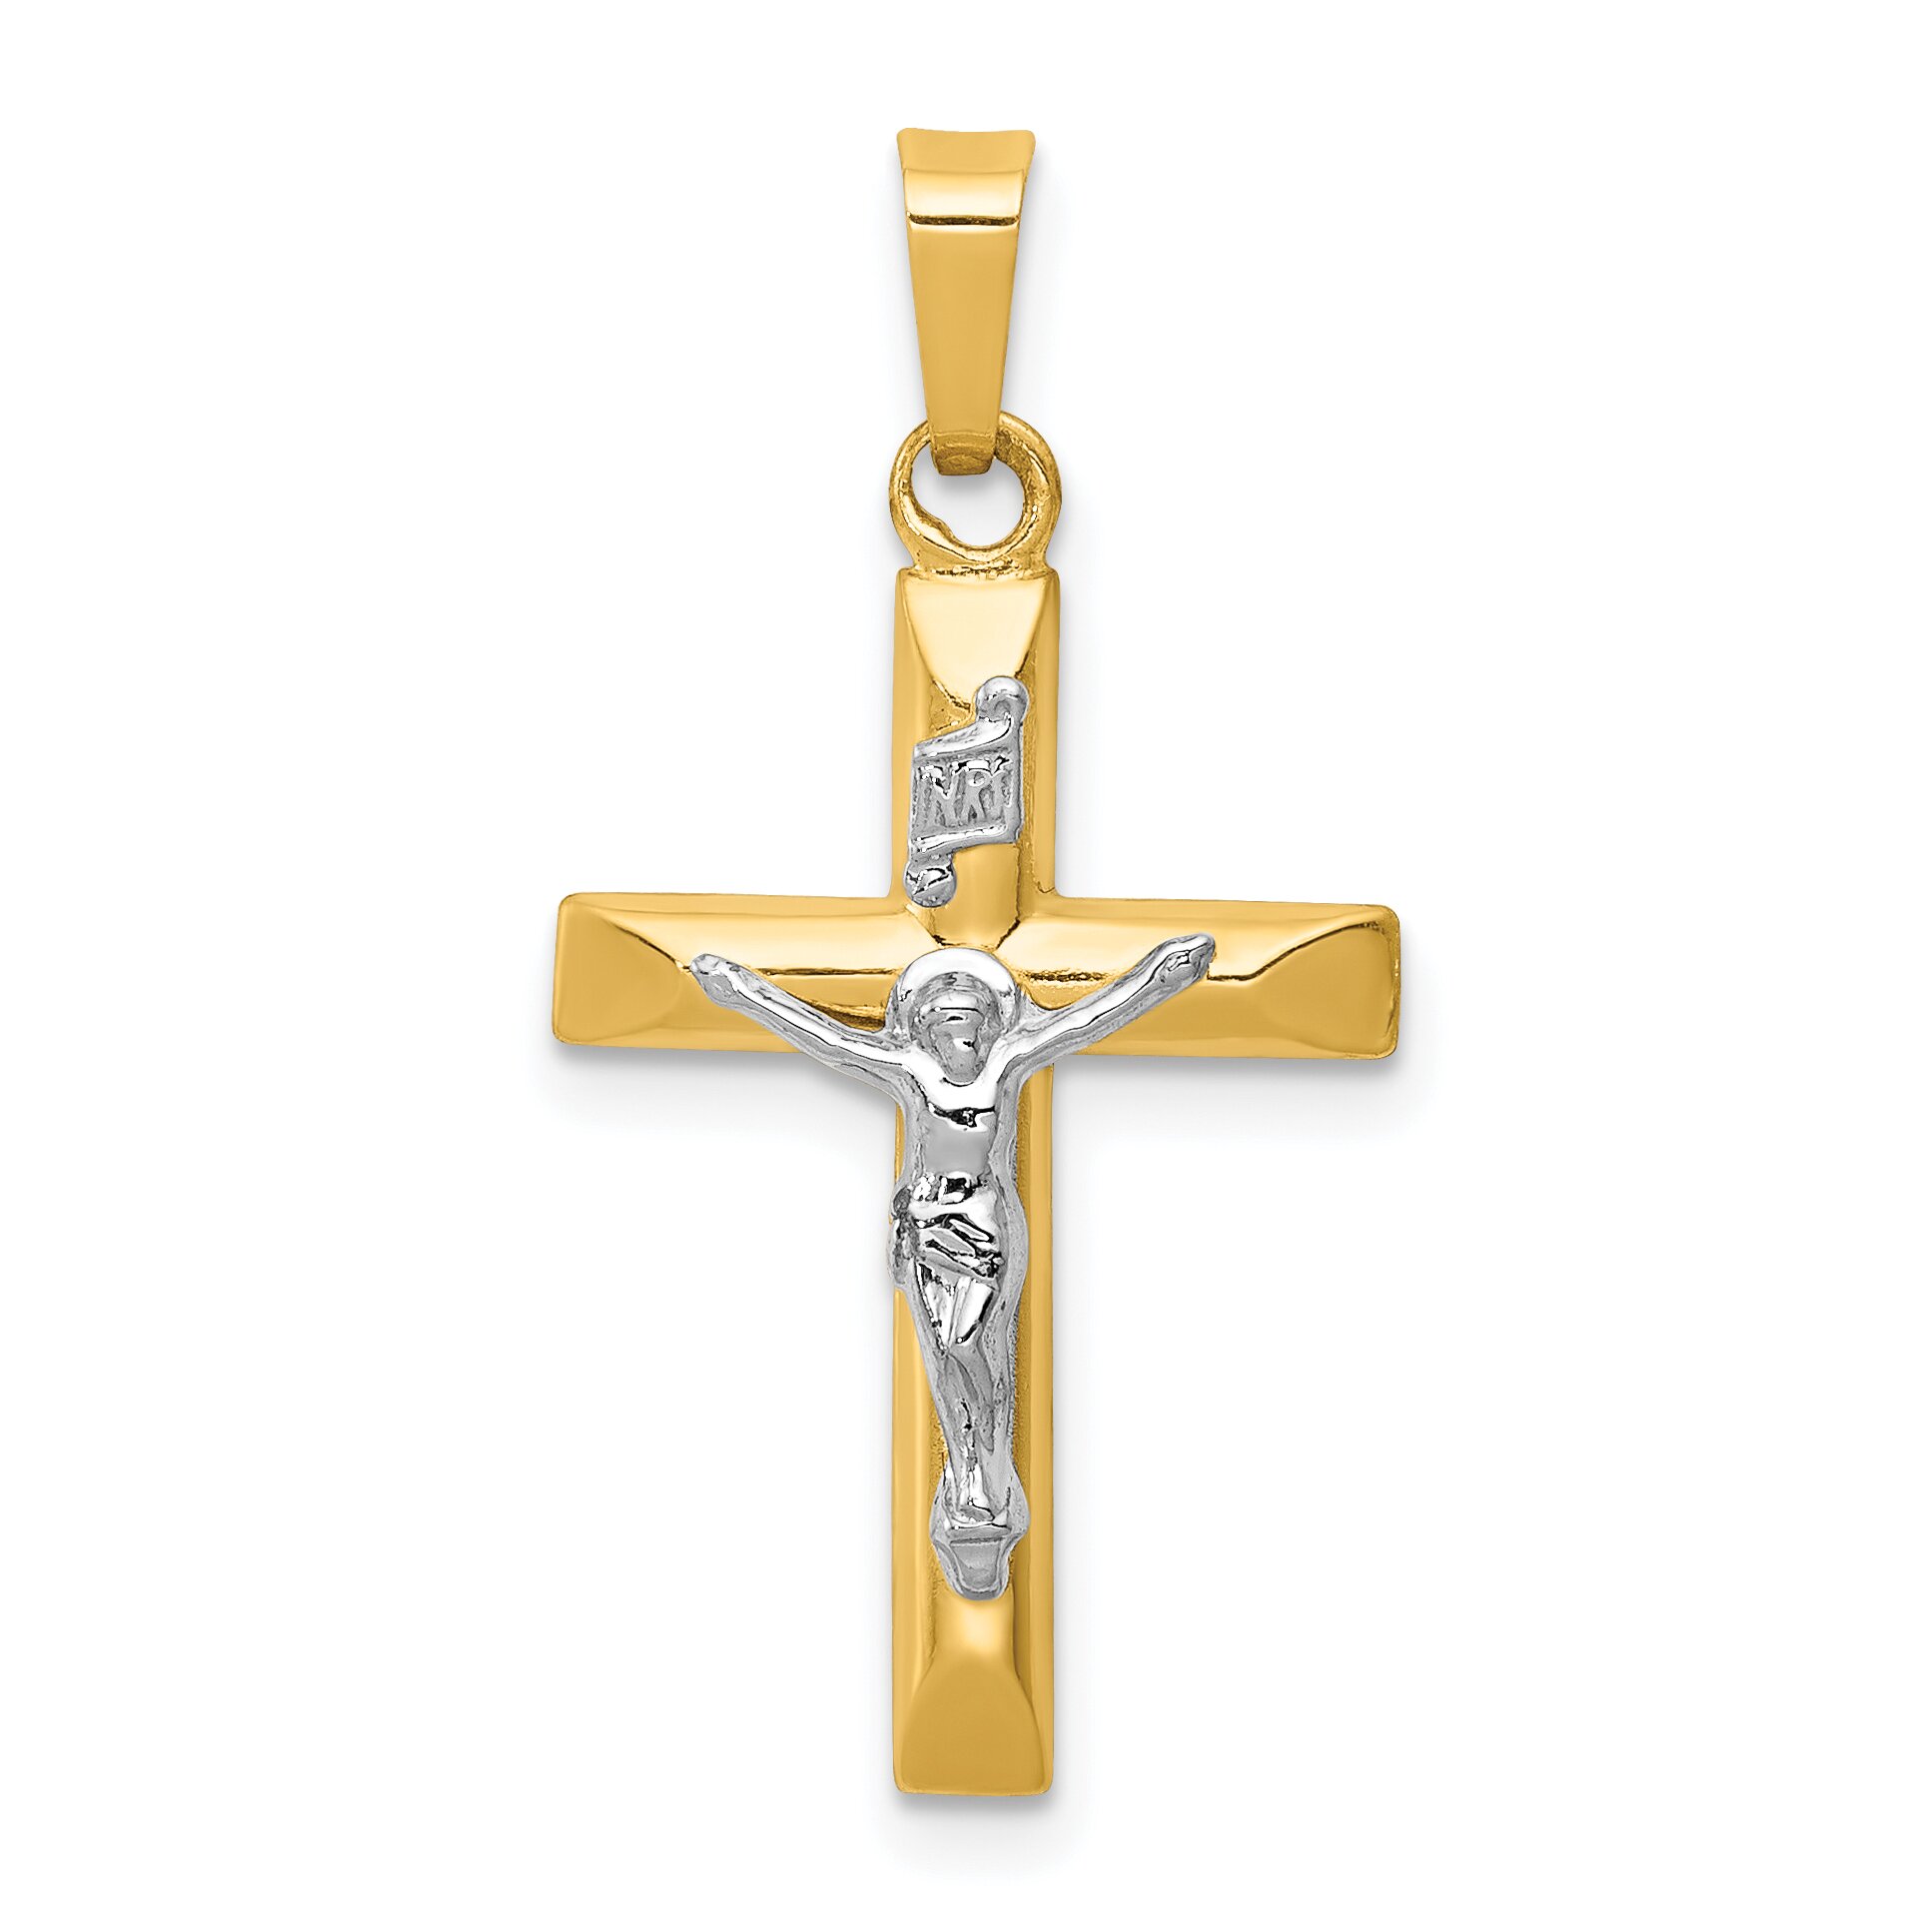 Findingking 14K Two Tone Gold INRI Hollow Crucifix Pendant